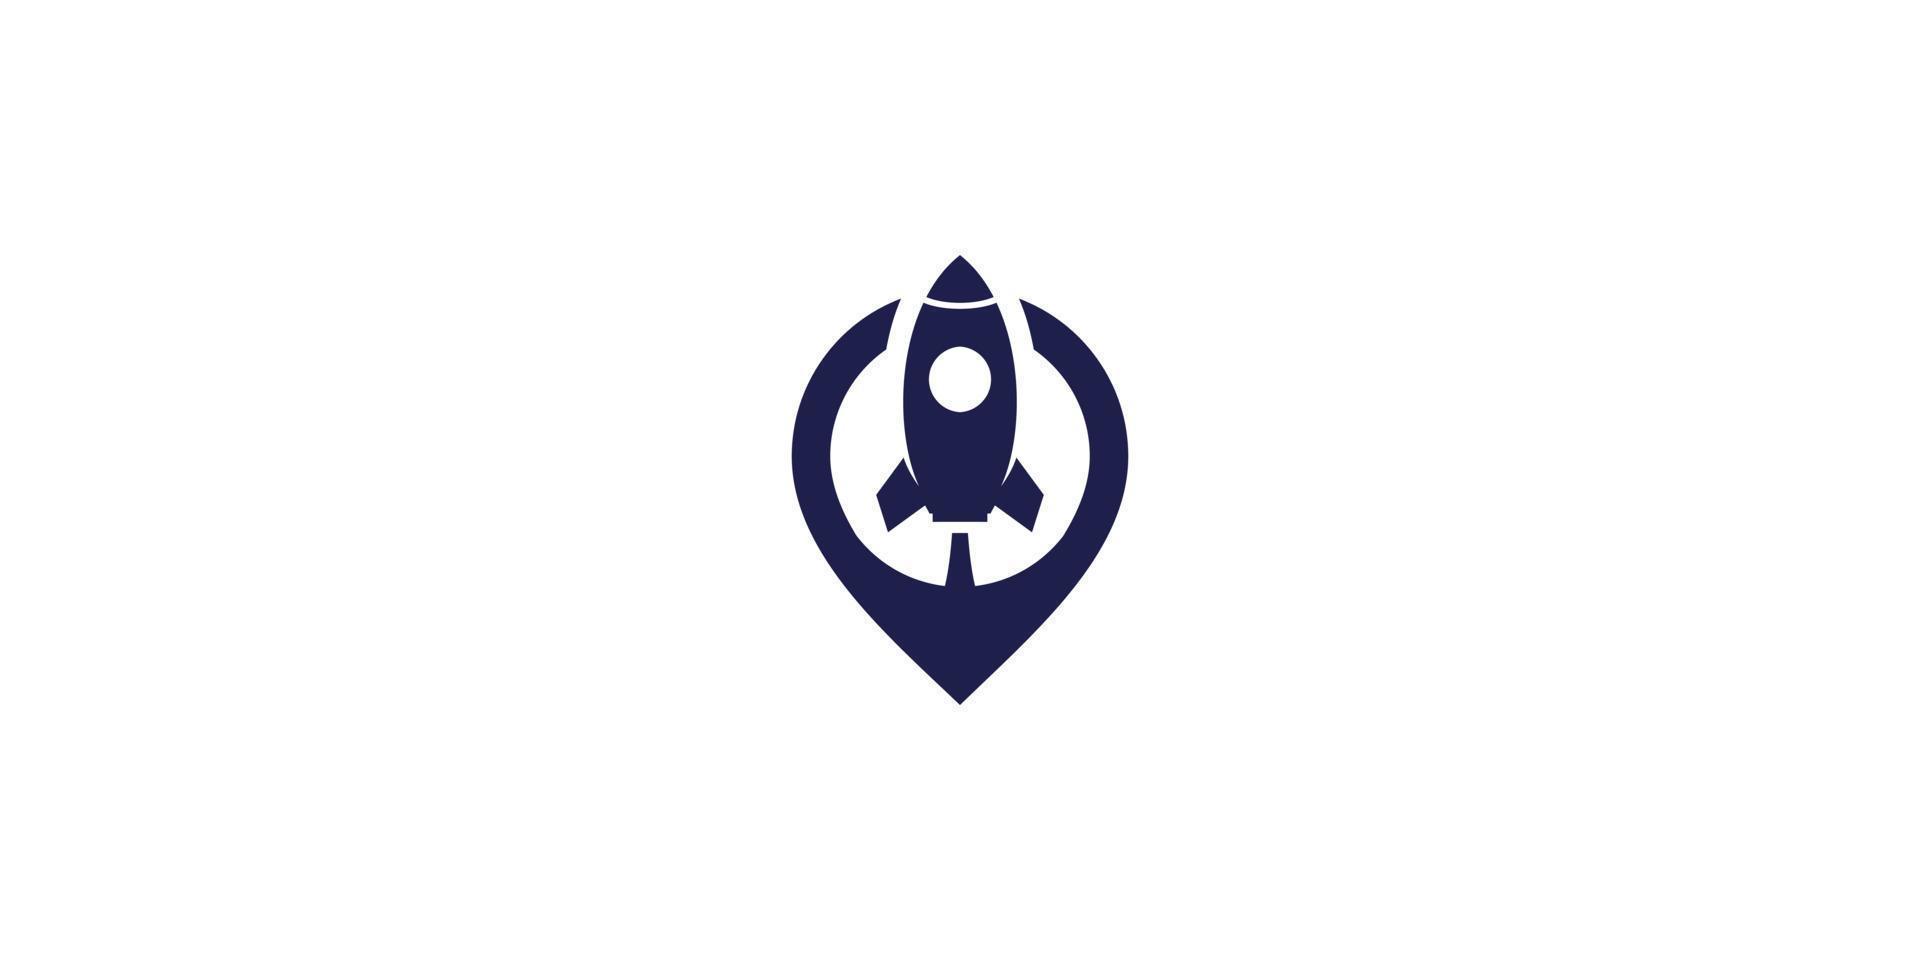 Raketen-Pin-Logo-Vektor-Design vektor